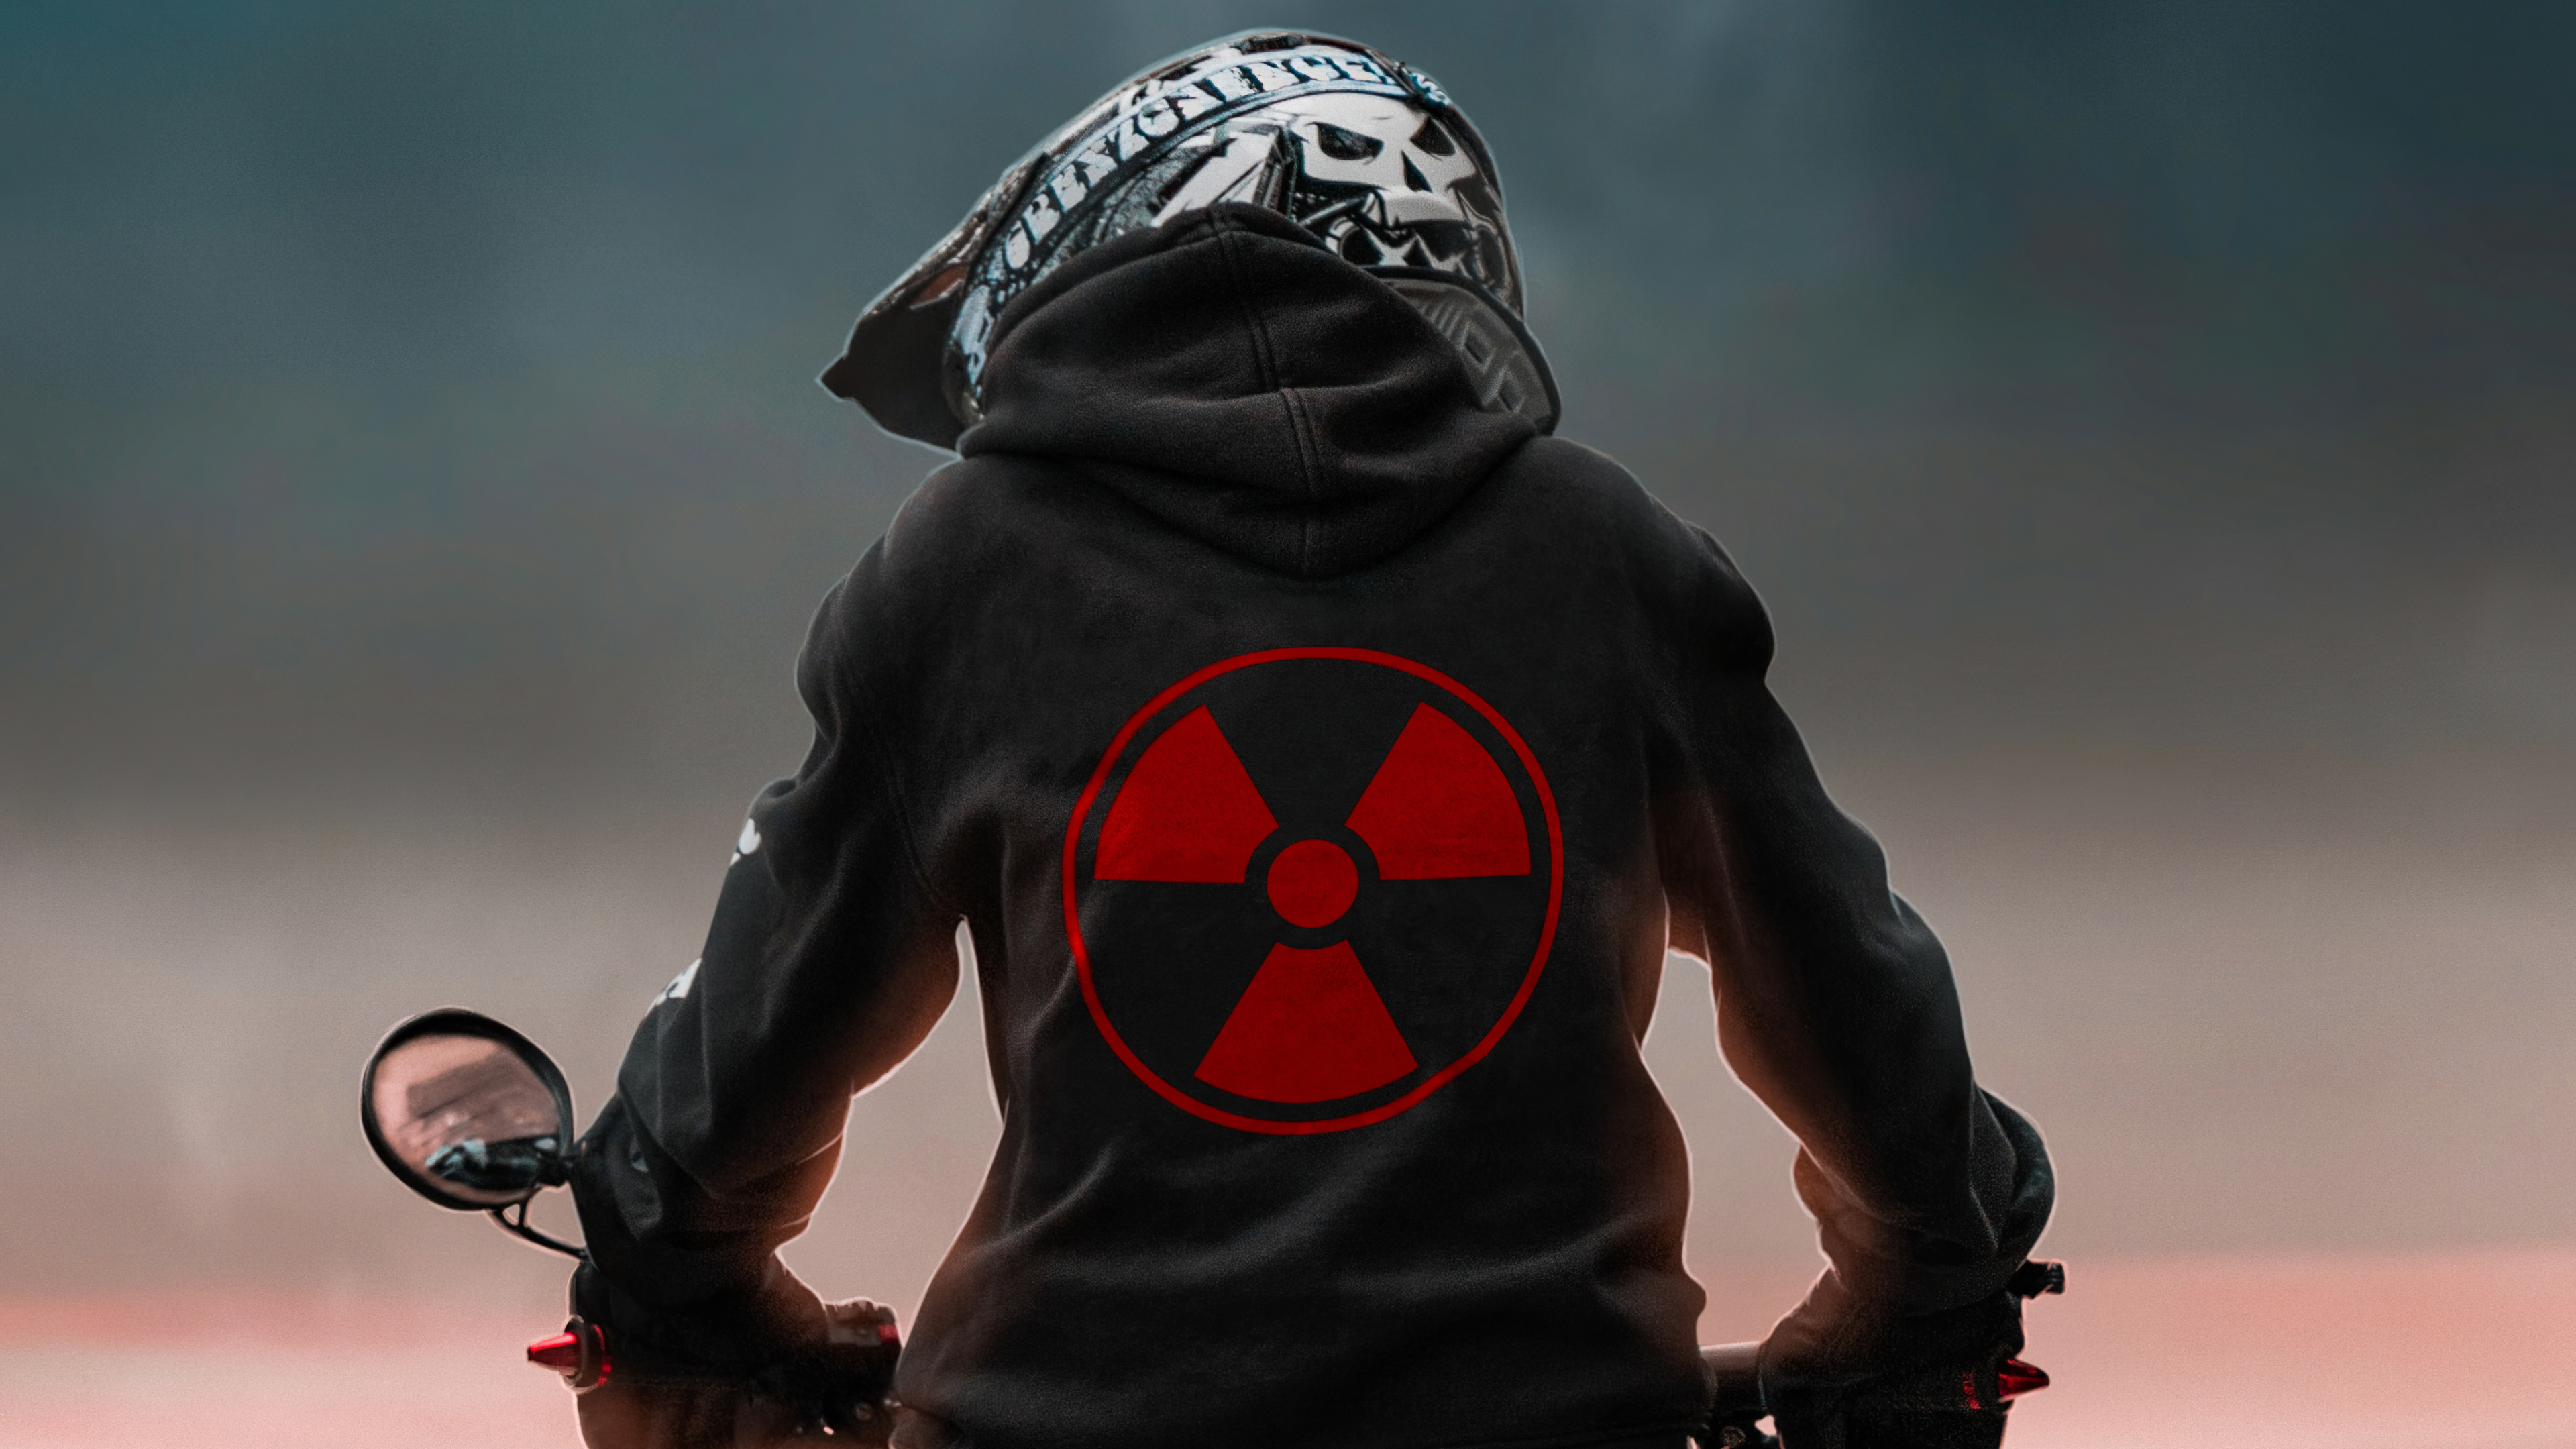 Free photo The radioactive sign on the biker`s jacket